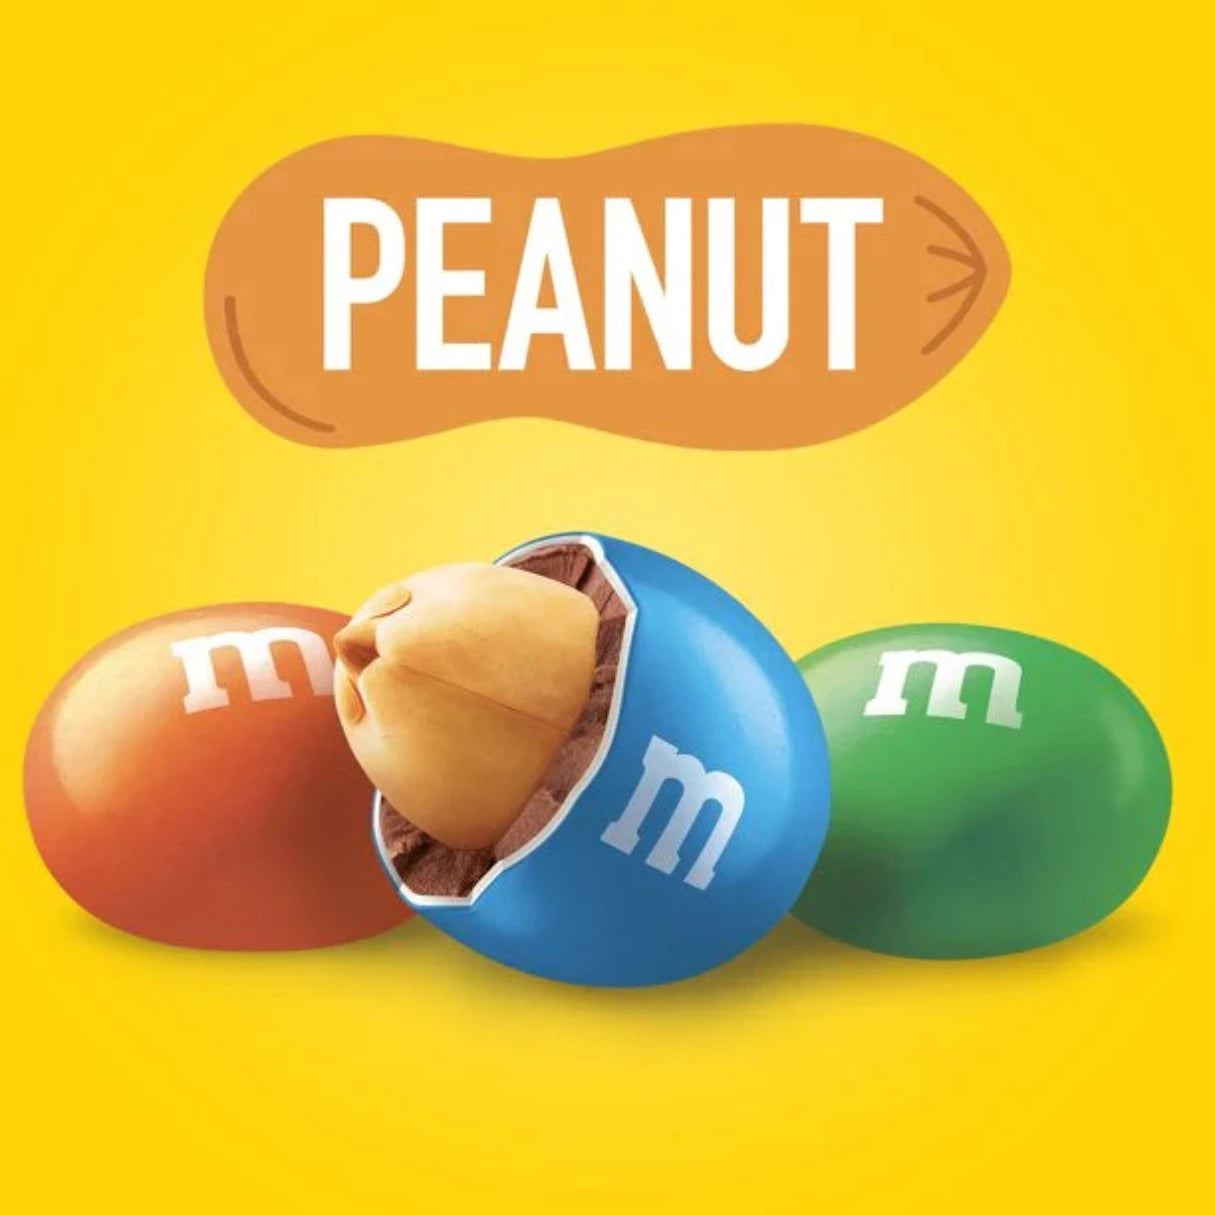 M&M's Peanut 1.74-oz. Package